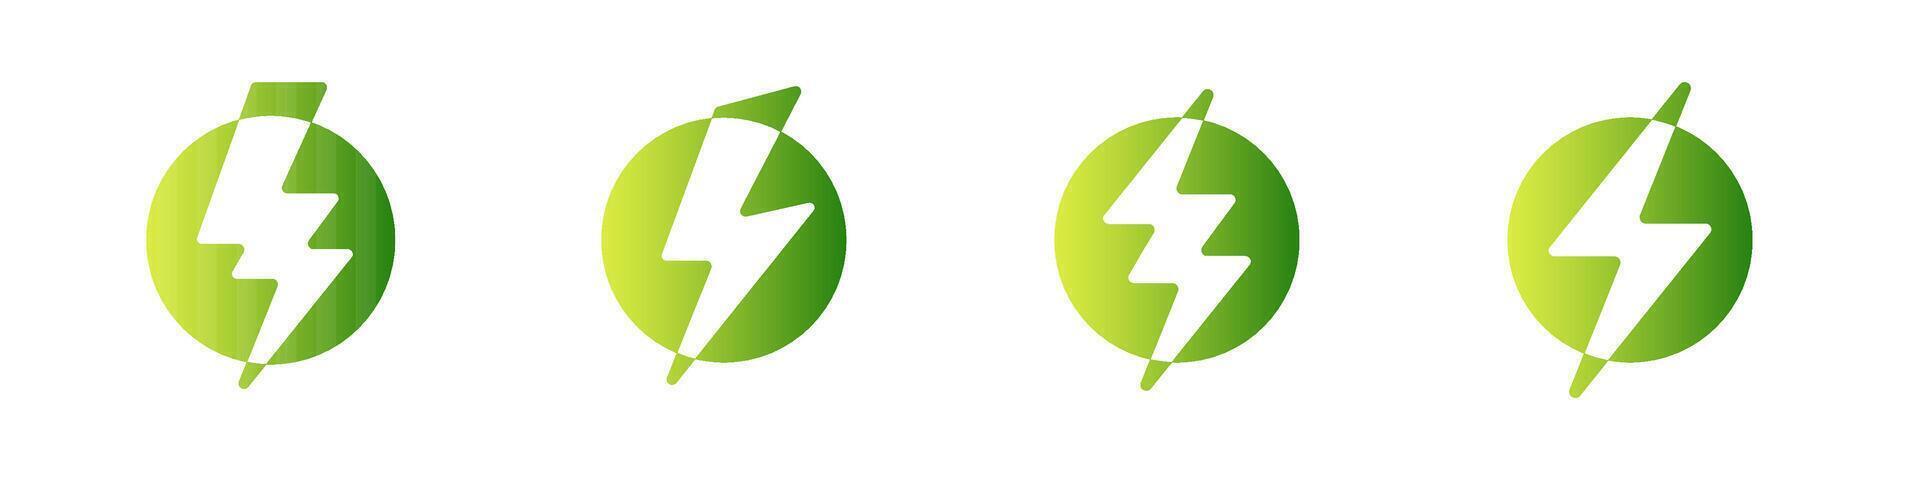 Green eco energy Logo Thunder Energy and Flash Bolt Icon vector